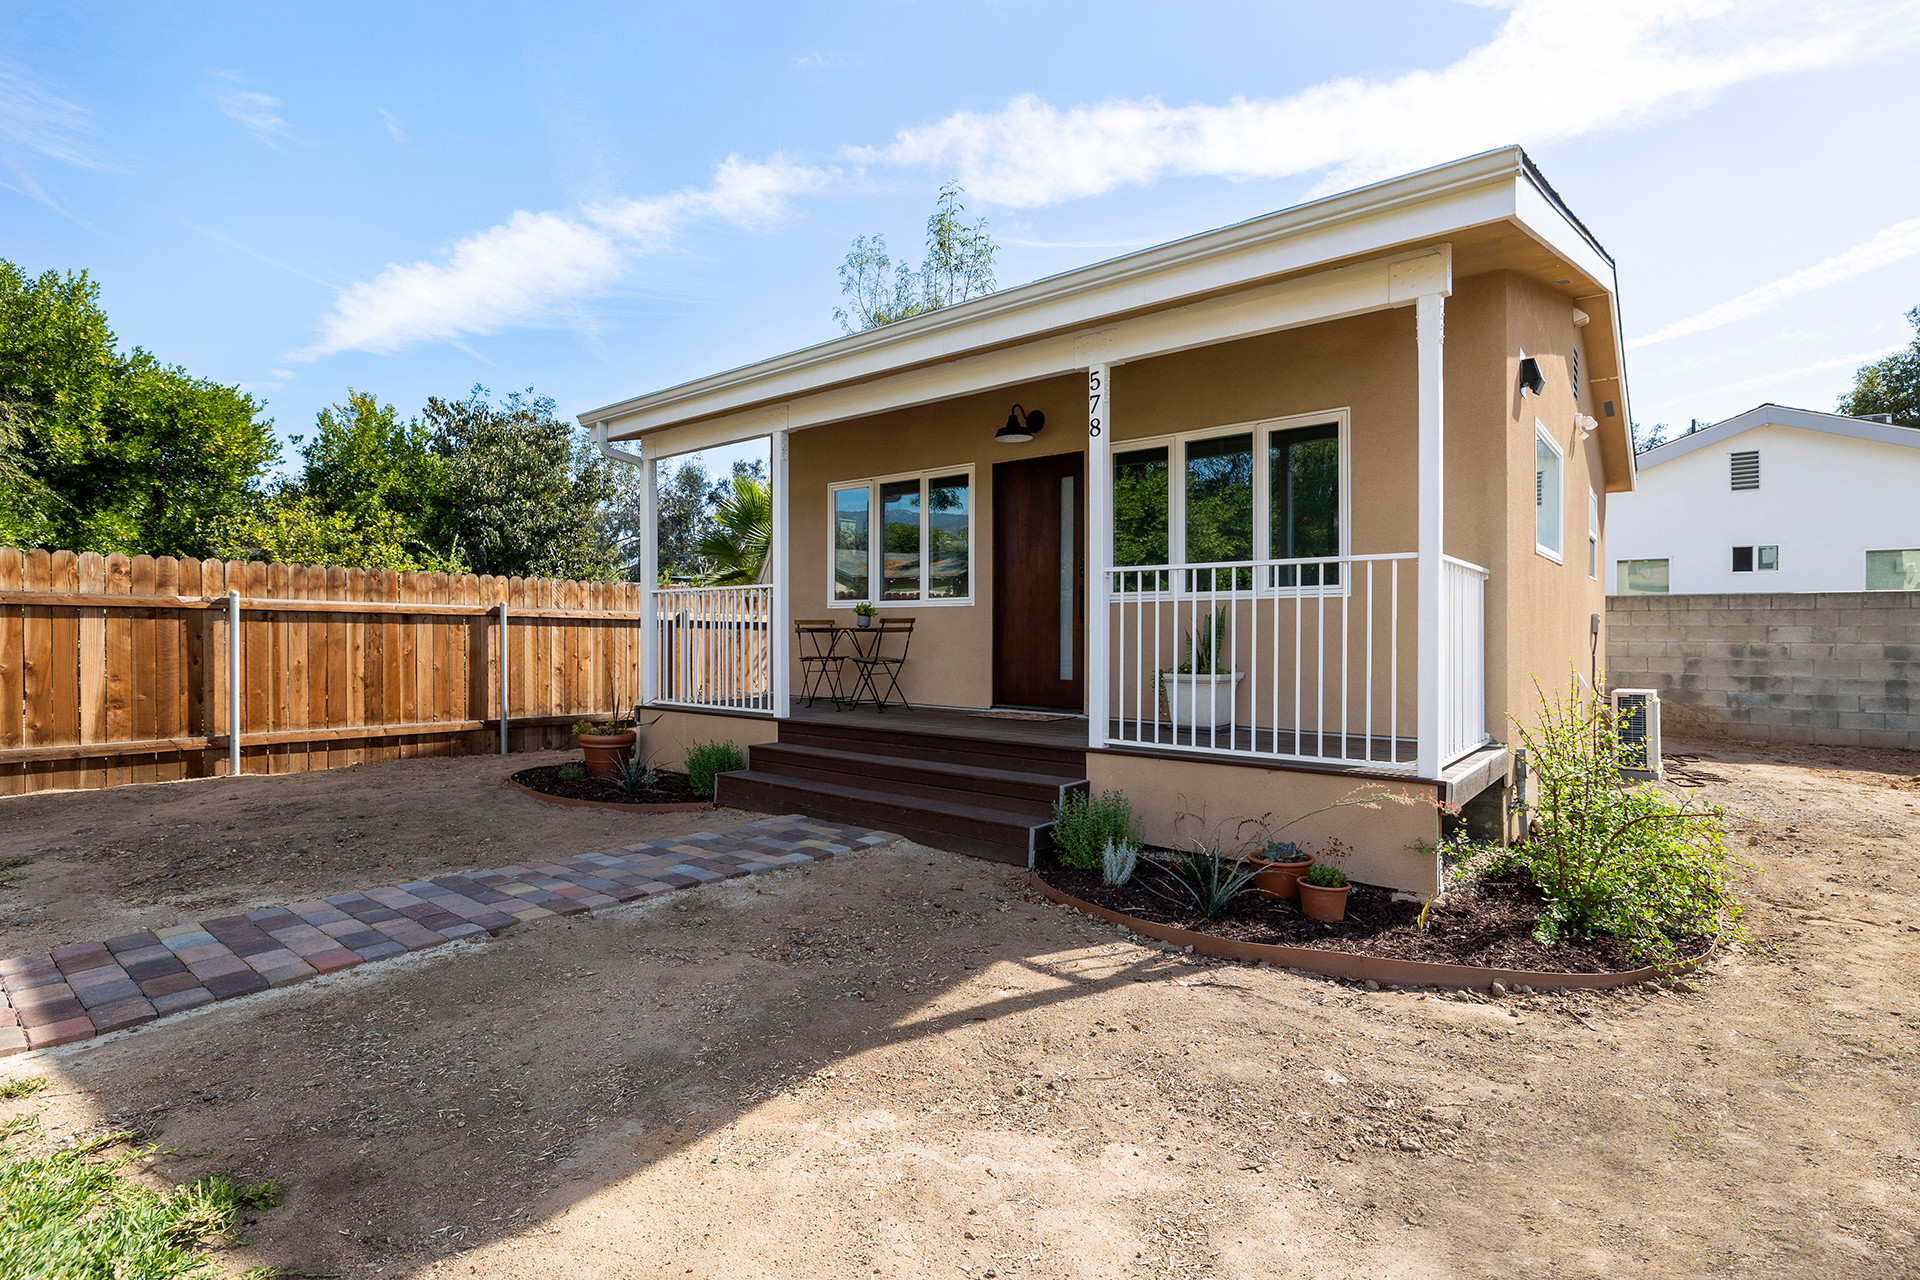 Pasadena, CA / Complete Accessory Dwelling Unit Build